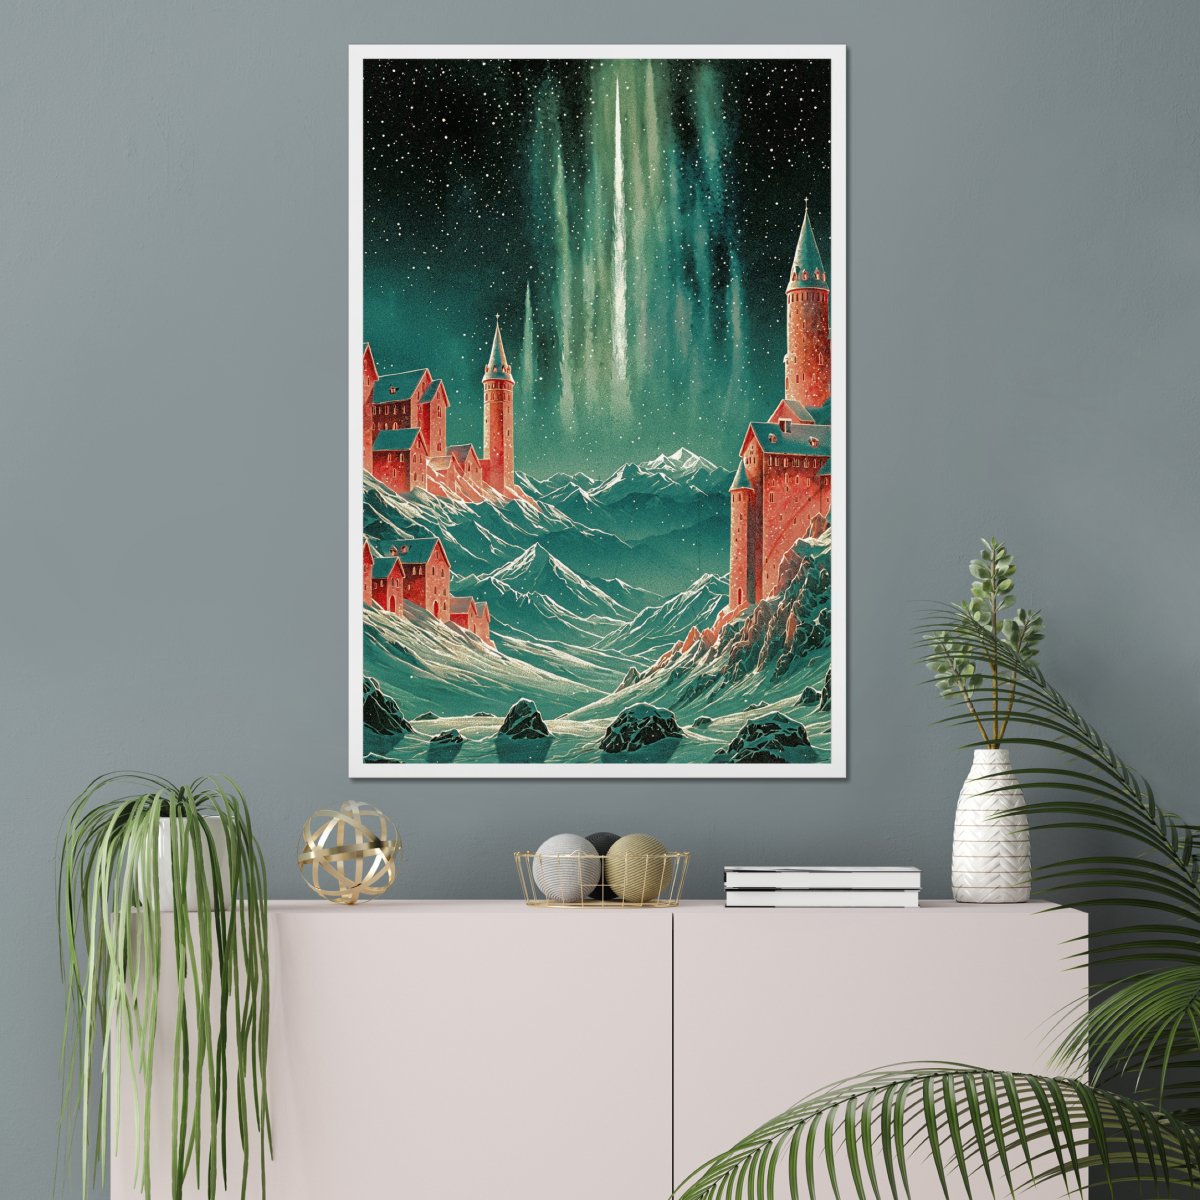 Aurora grande - Art print - Poster - Ever colorful